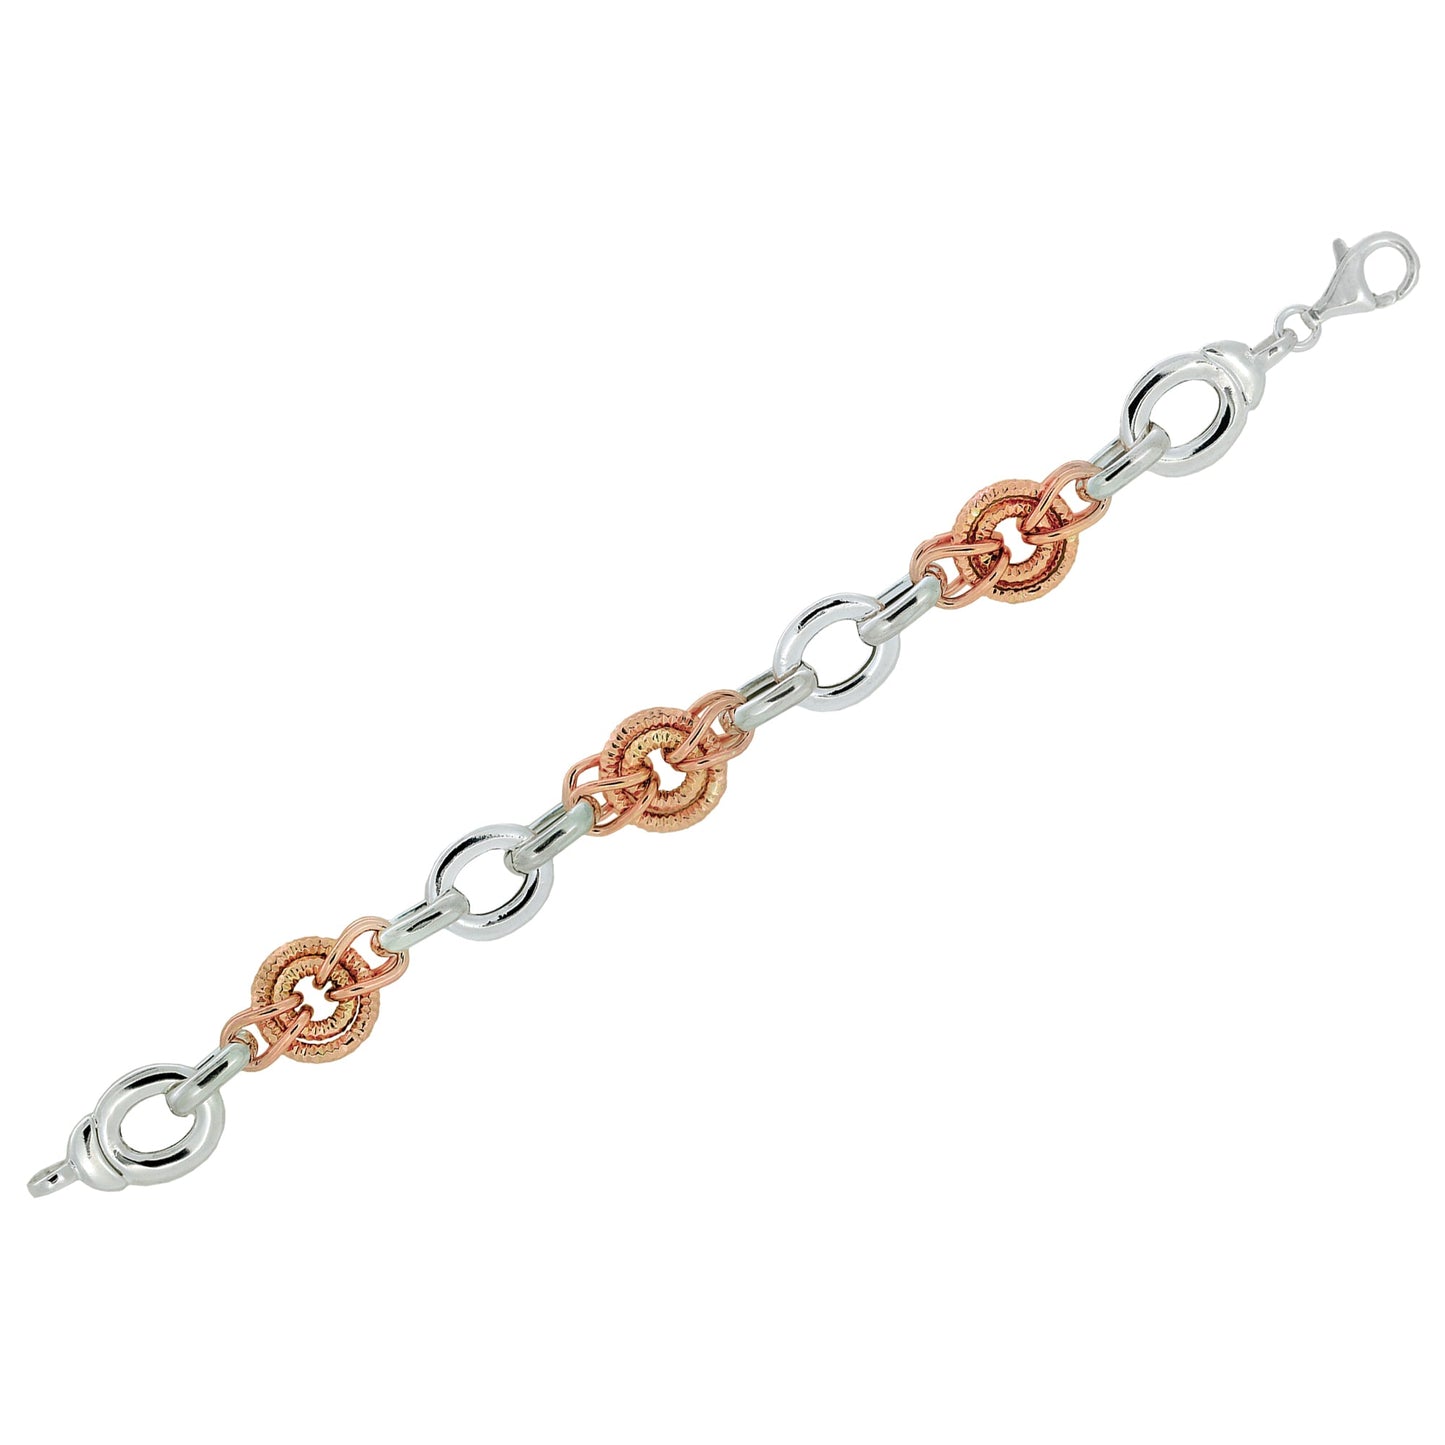 Franco Stellari Italian Sterling Silver & Rose Gold Circle Links Bracelet, 8"